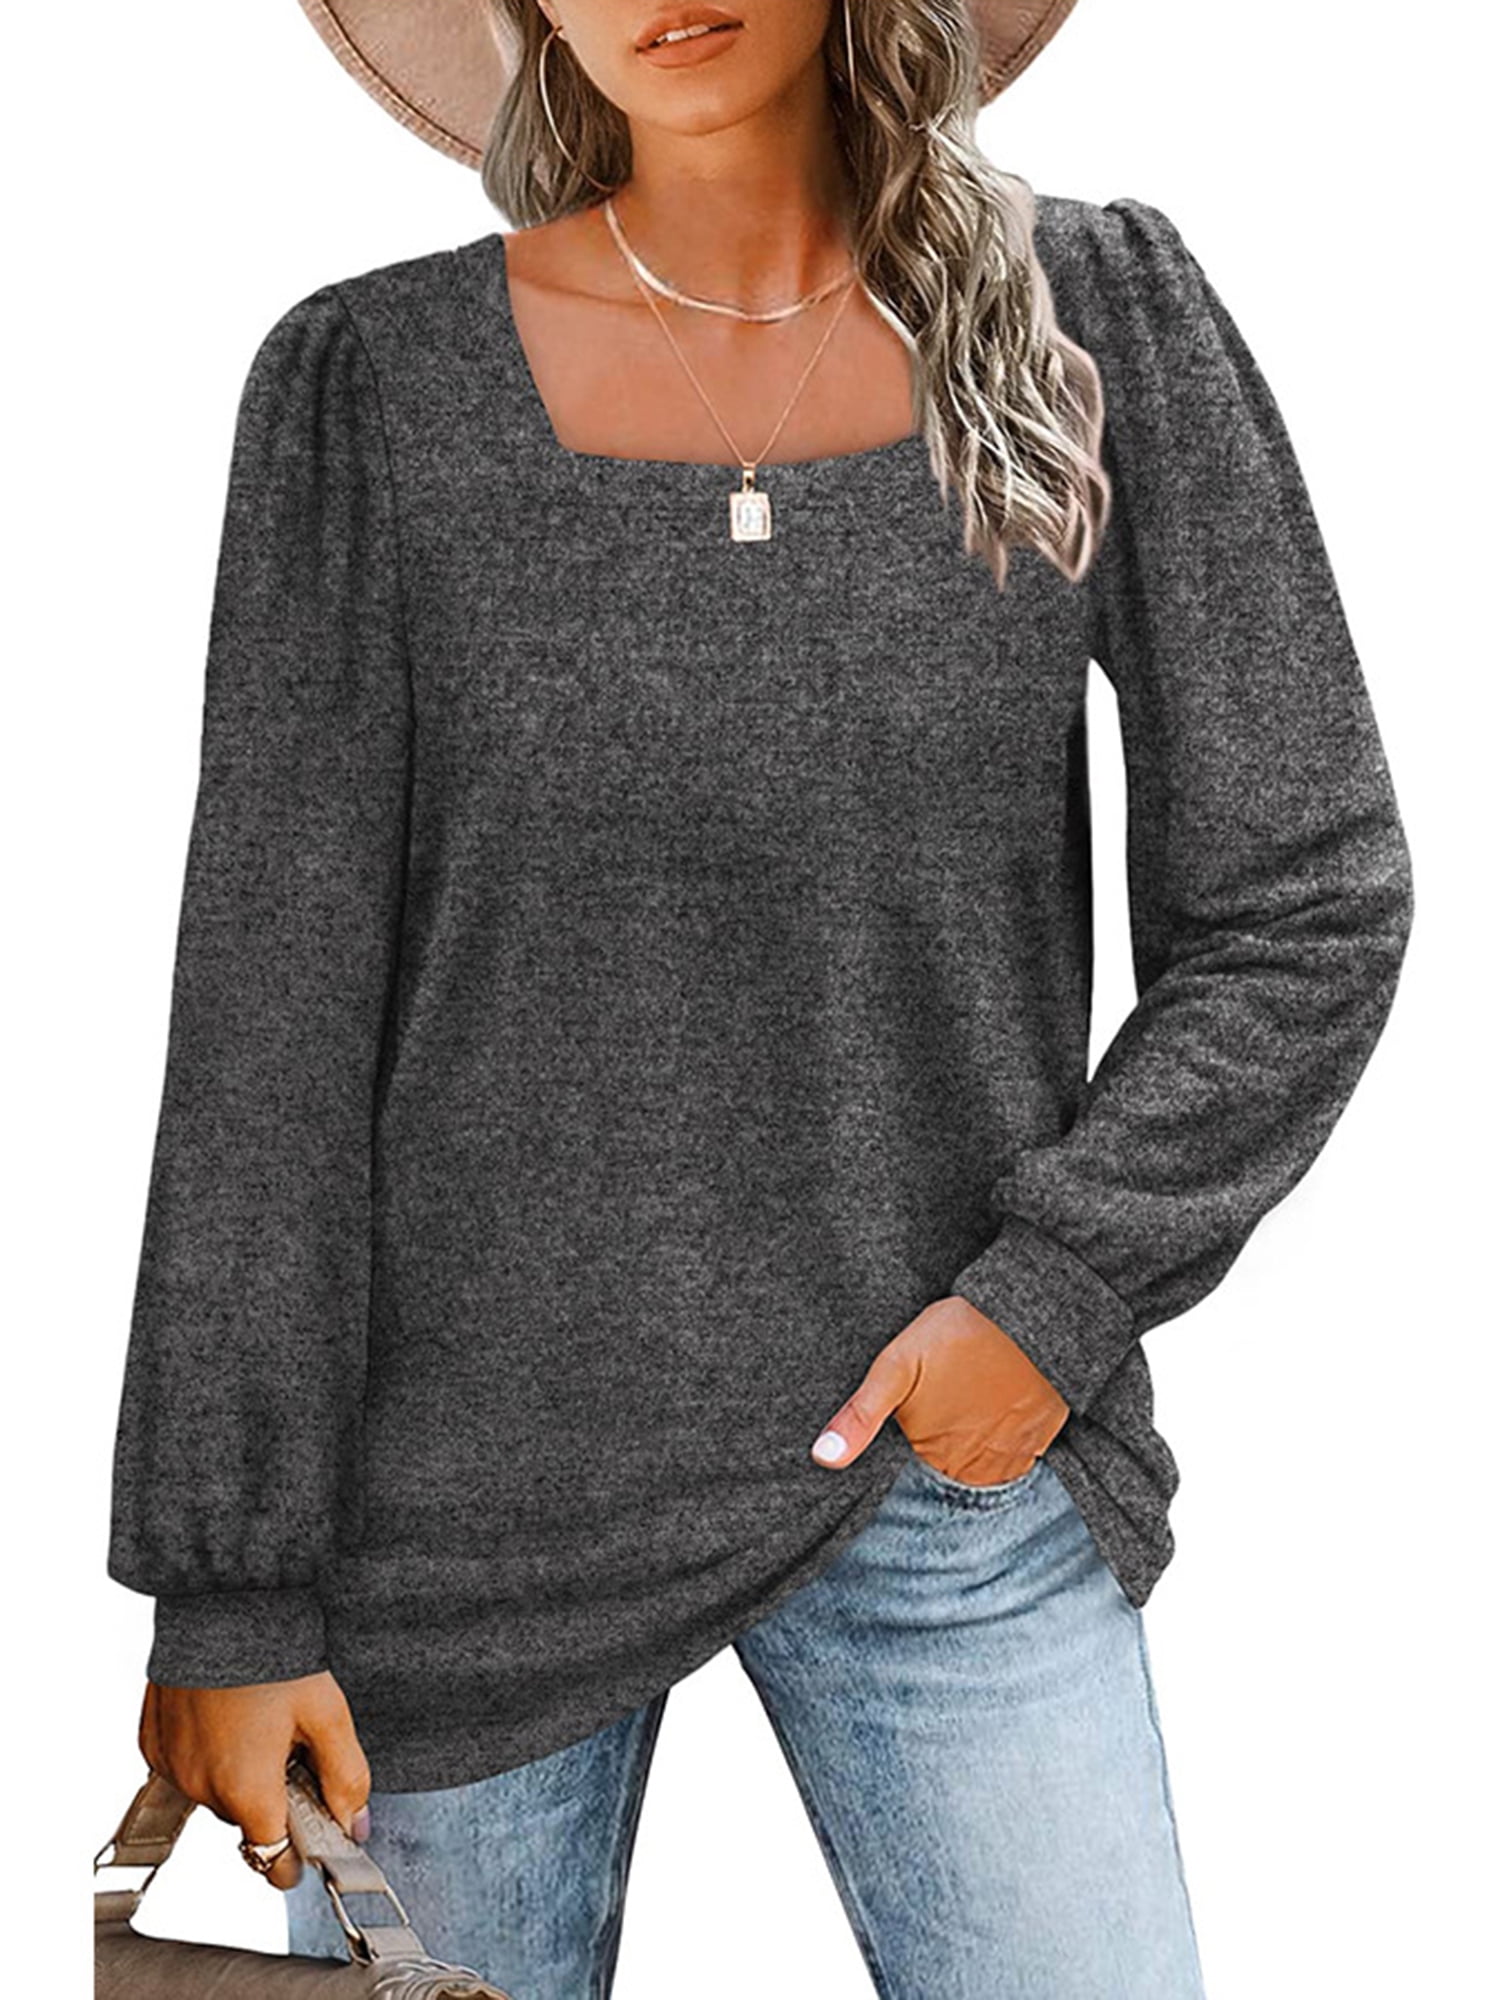 UVN Square Neck Sweatshirt for Women Long Sleeve Shirt Fall Tunic Tops ...